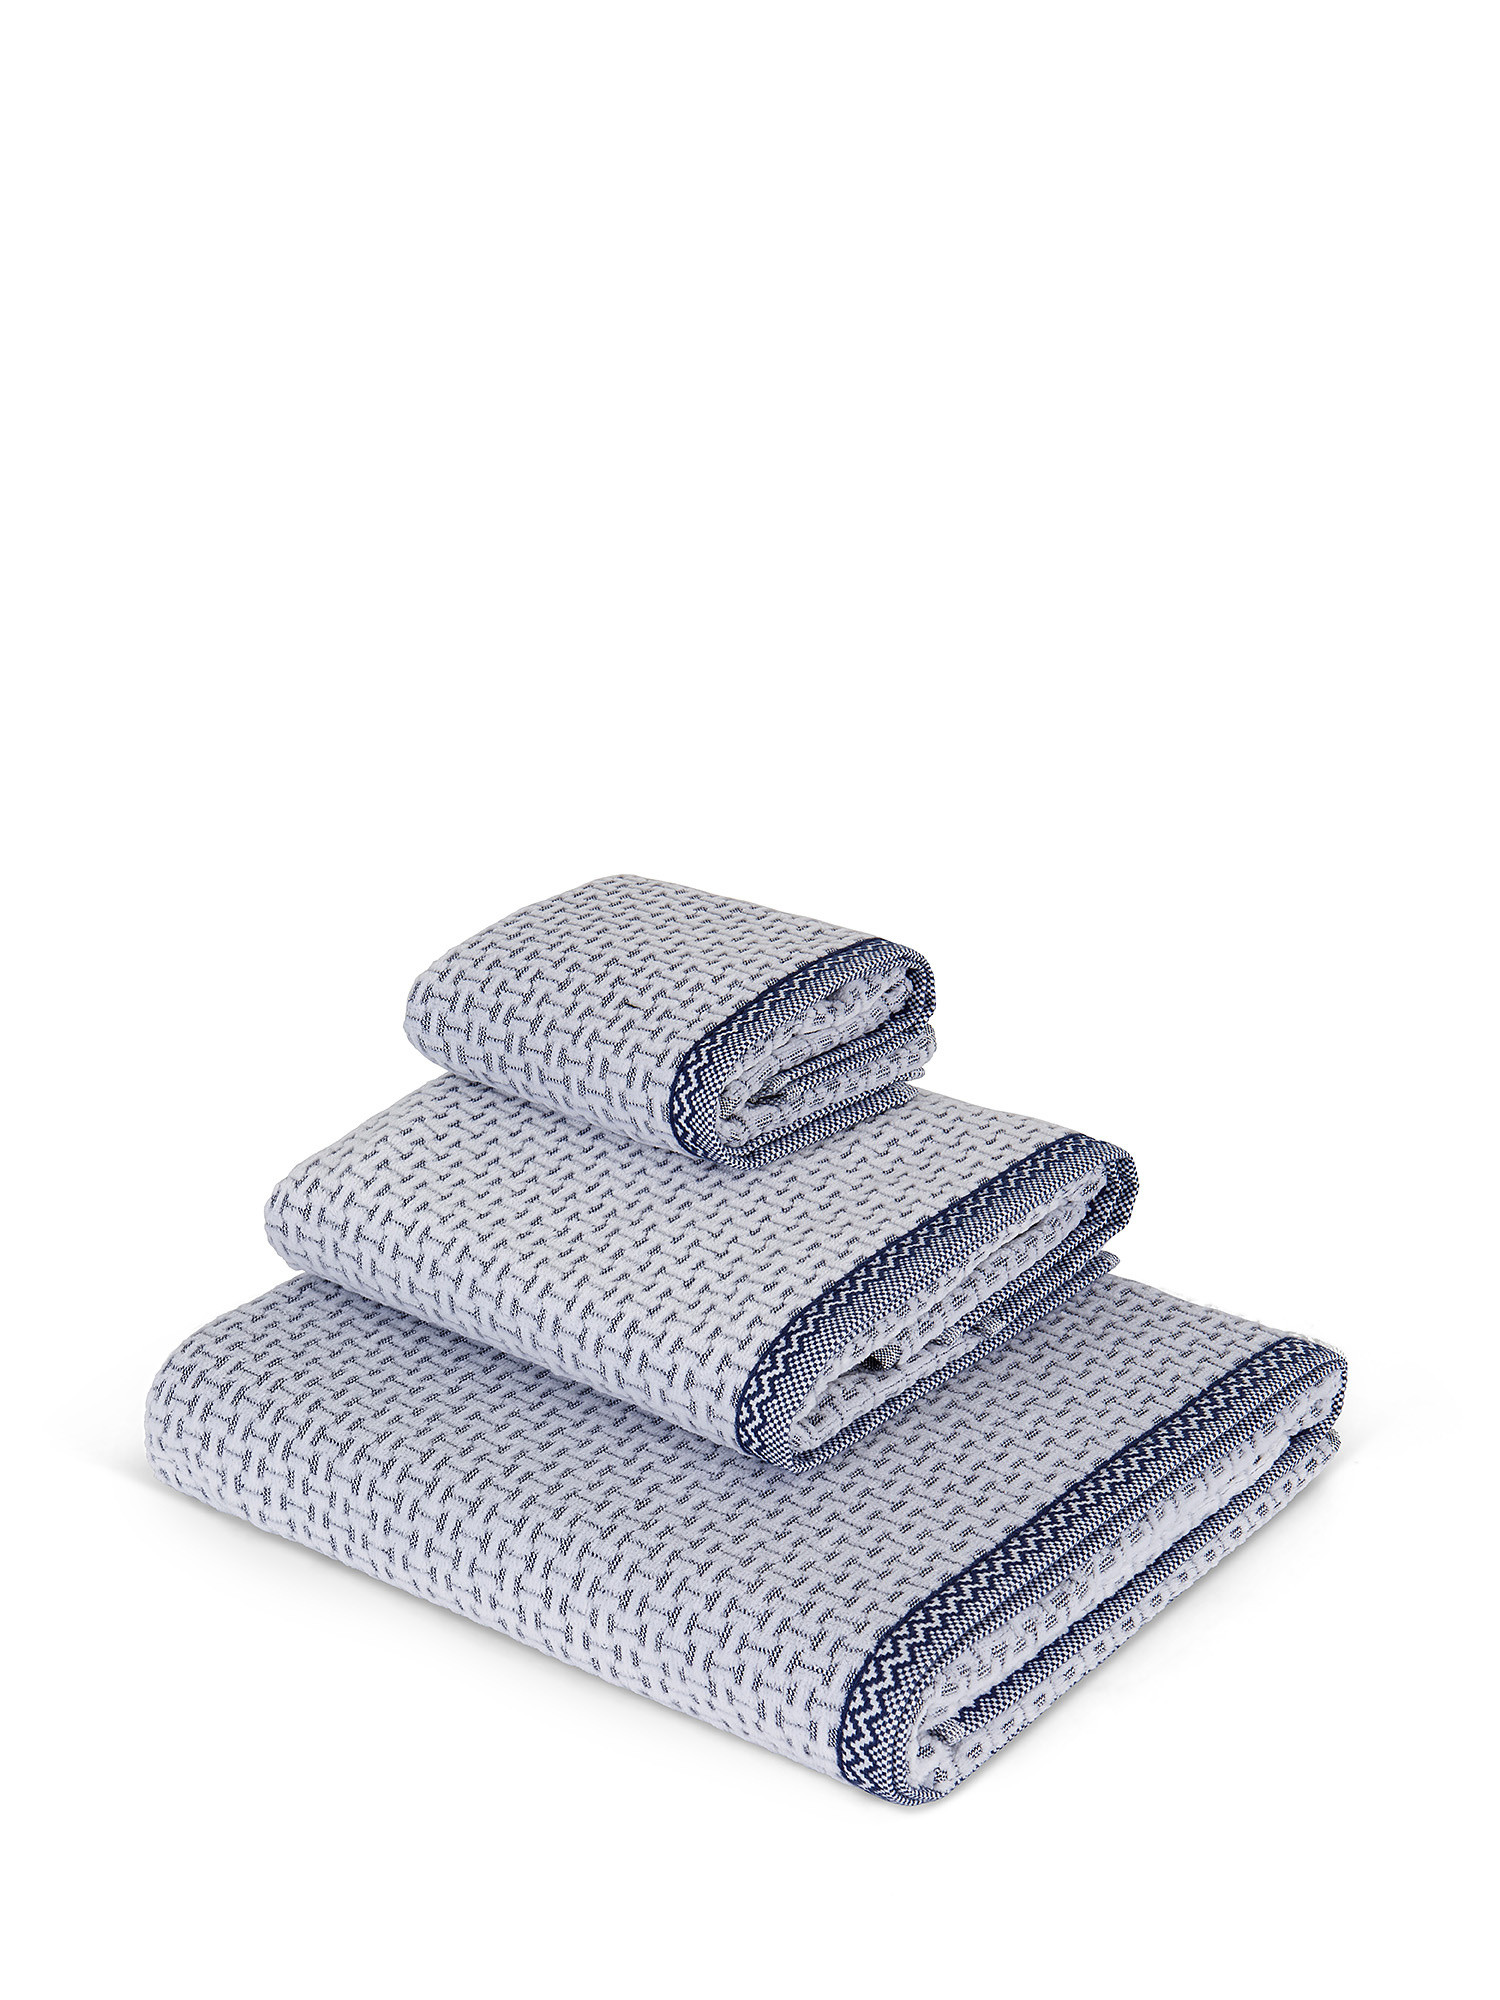 Asciugamano cotone velour motivo intreccio, Blu, large image number 0